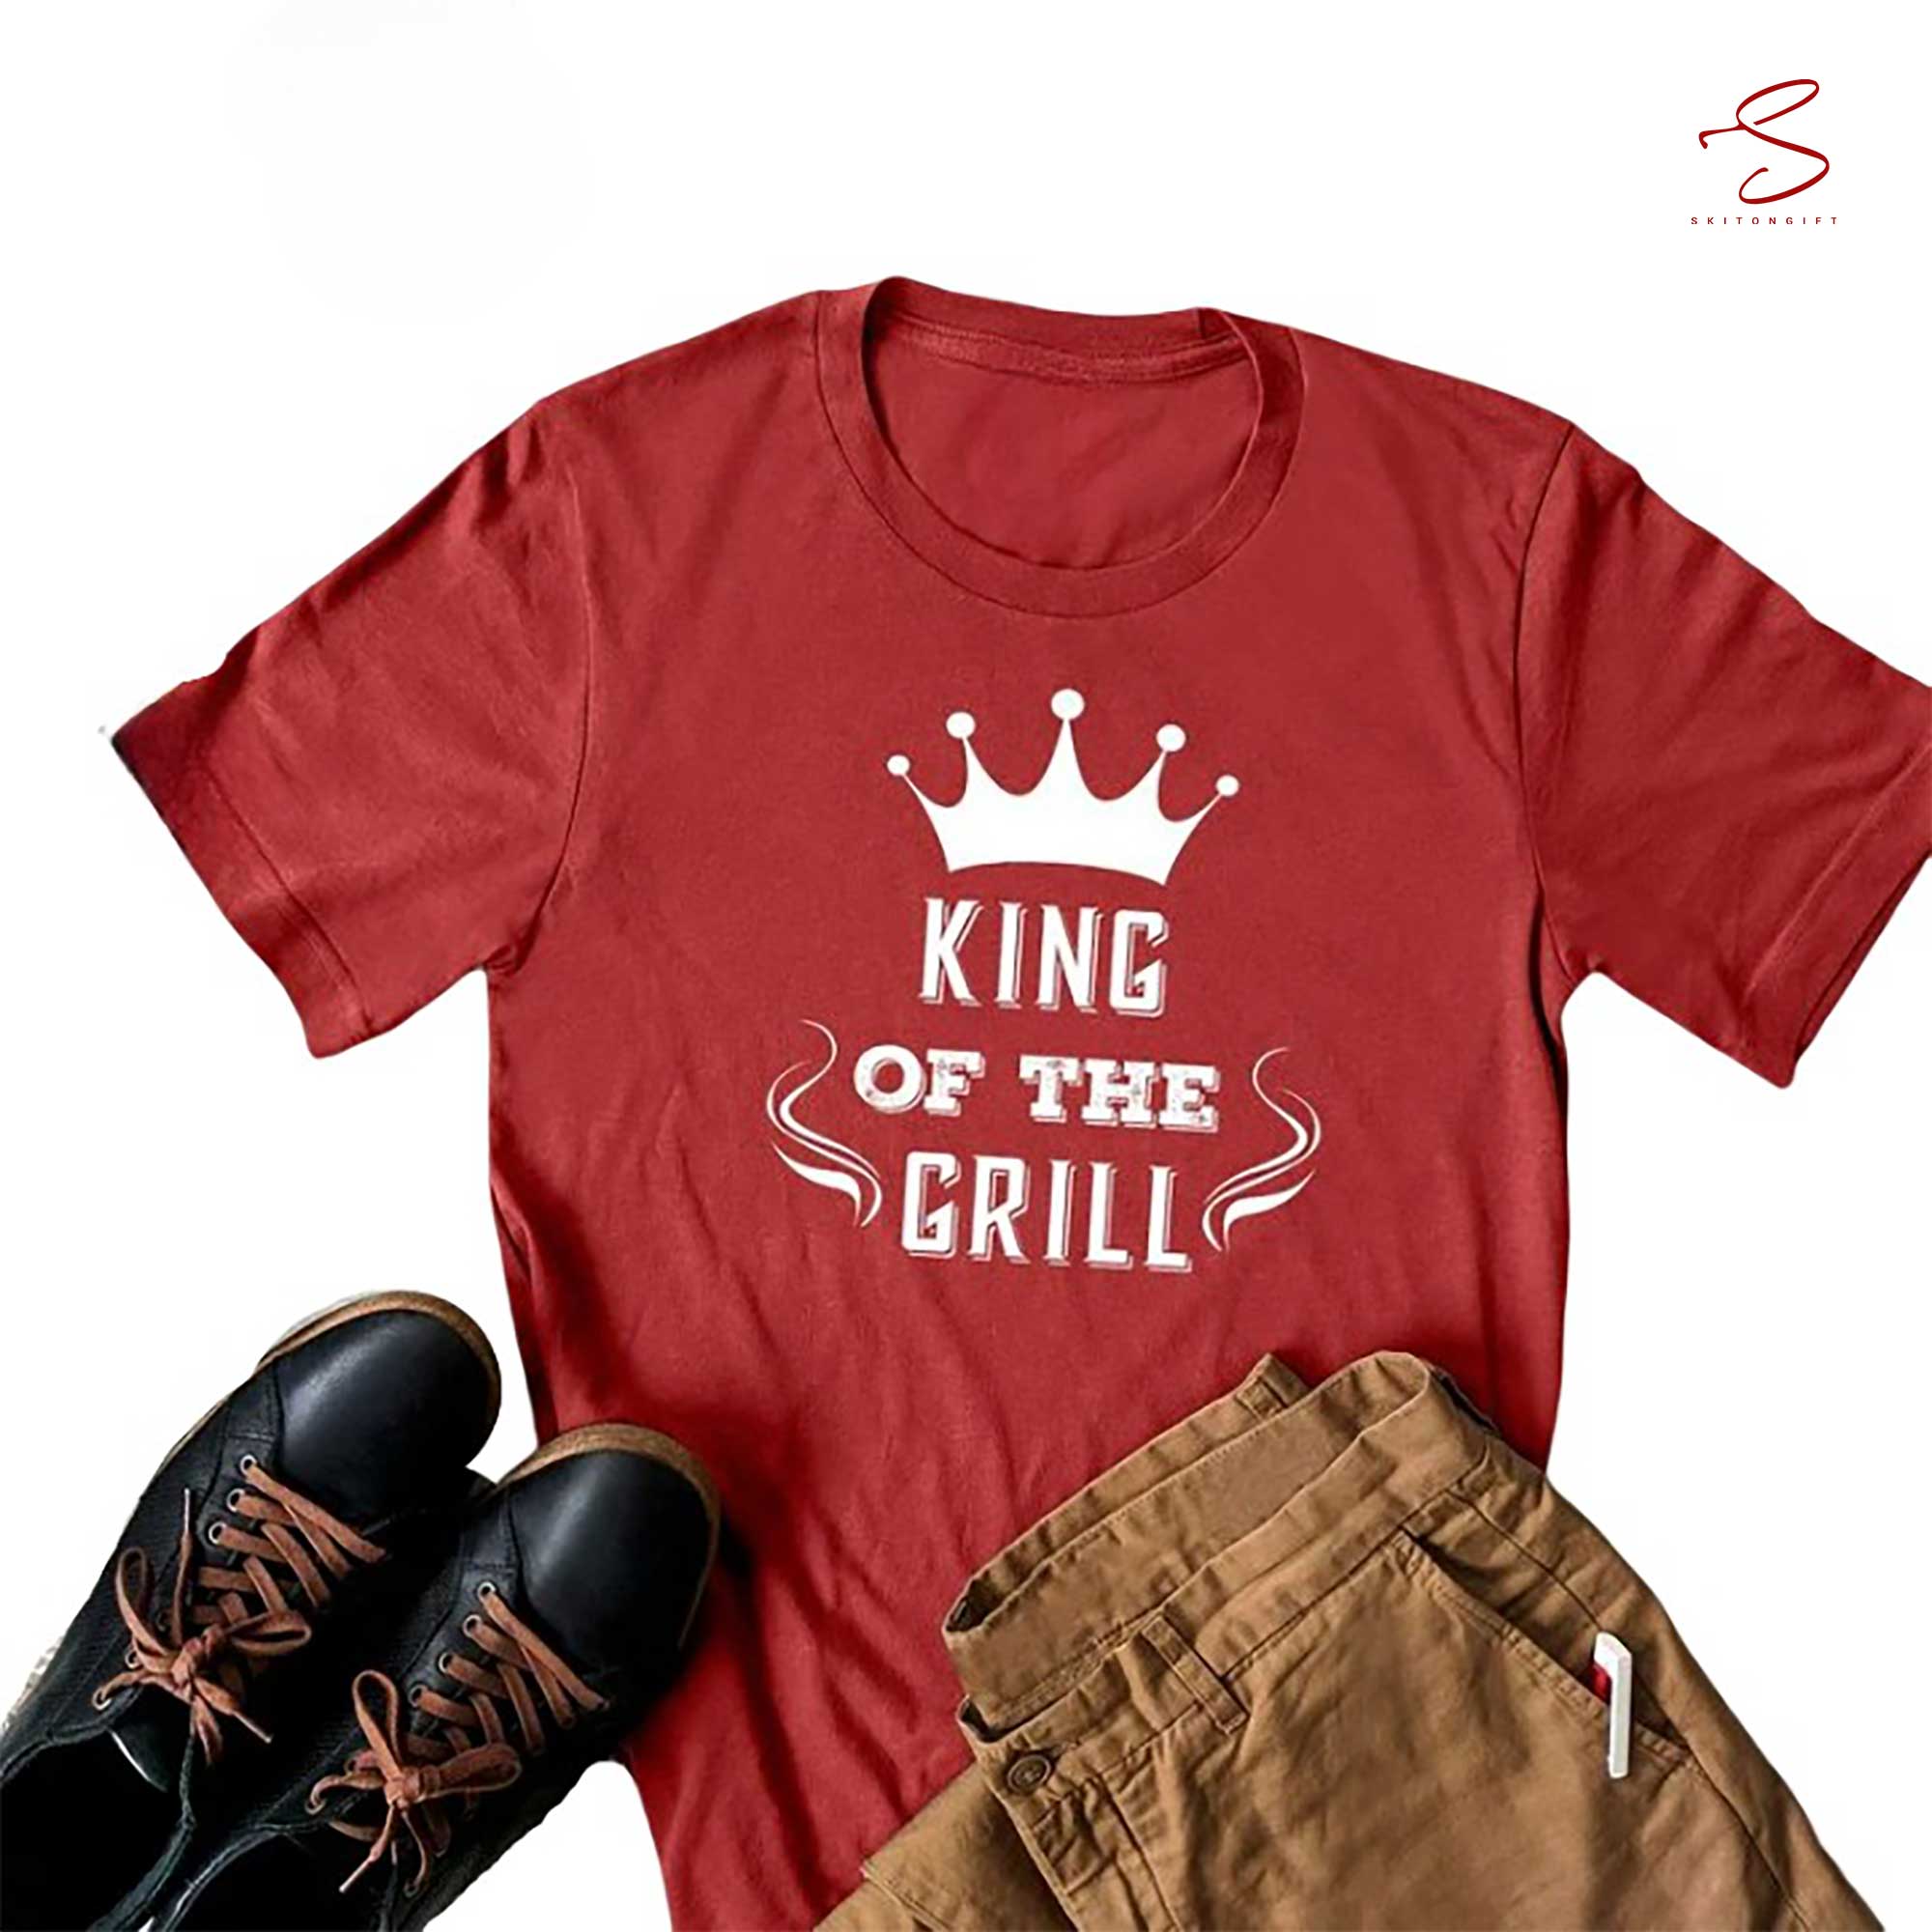 Skitongift King Of The Grill Tshirt For Men Bbq Cooking Gift For Dad Grilling Gift Funny Shirts Long Sleeve Tee Hoody Hoodie